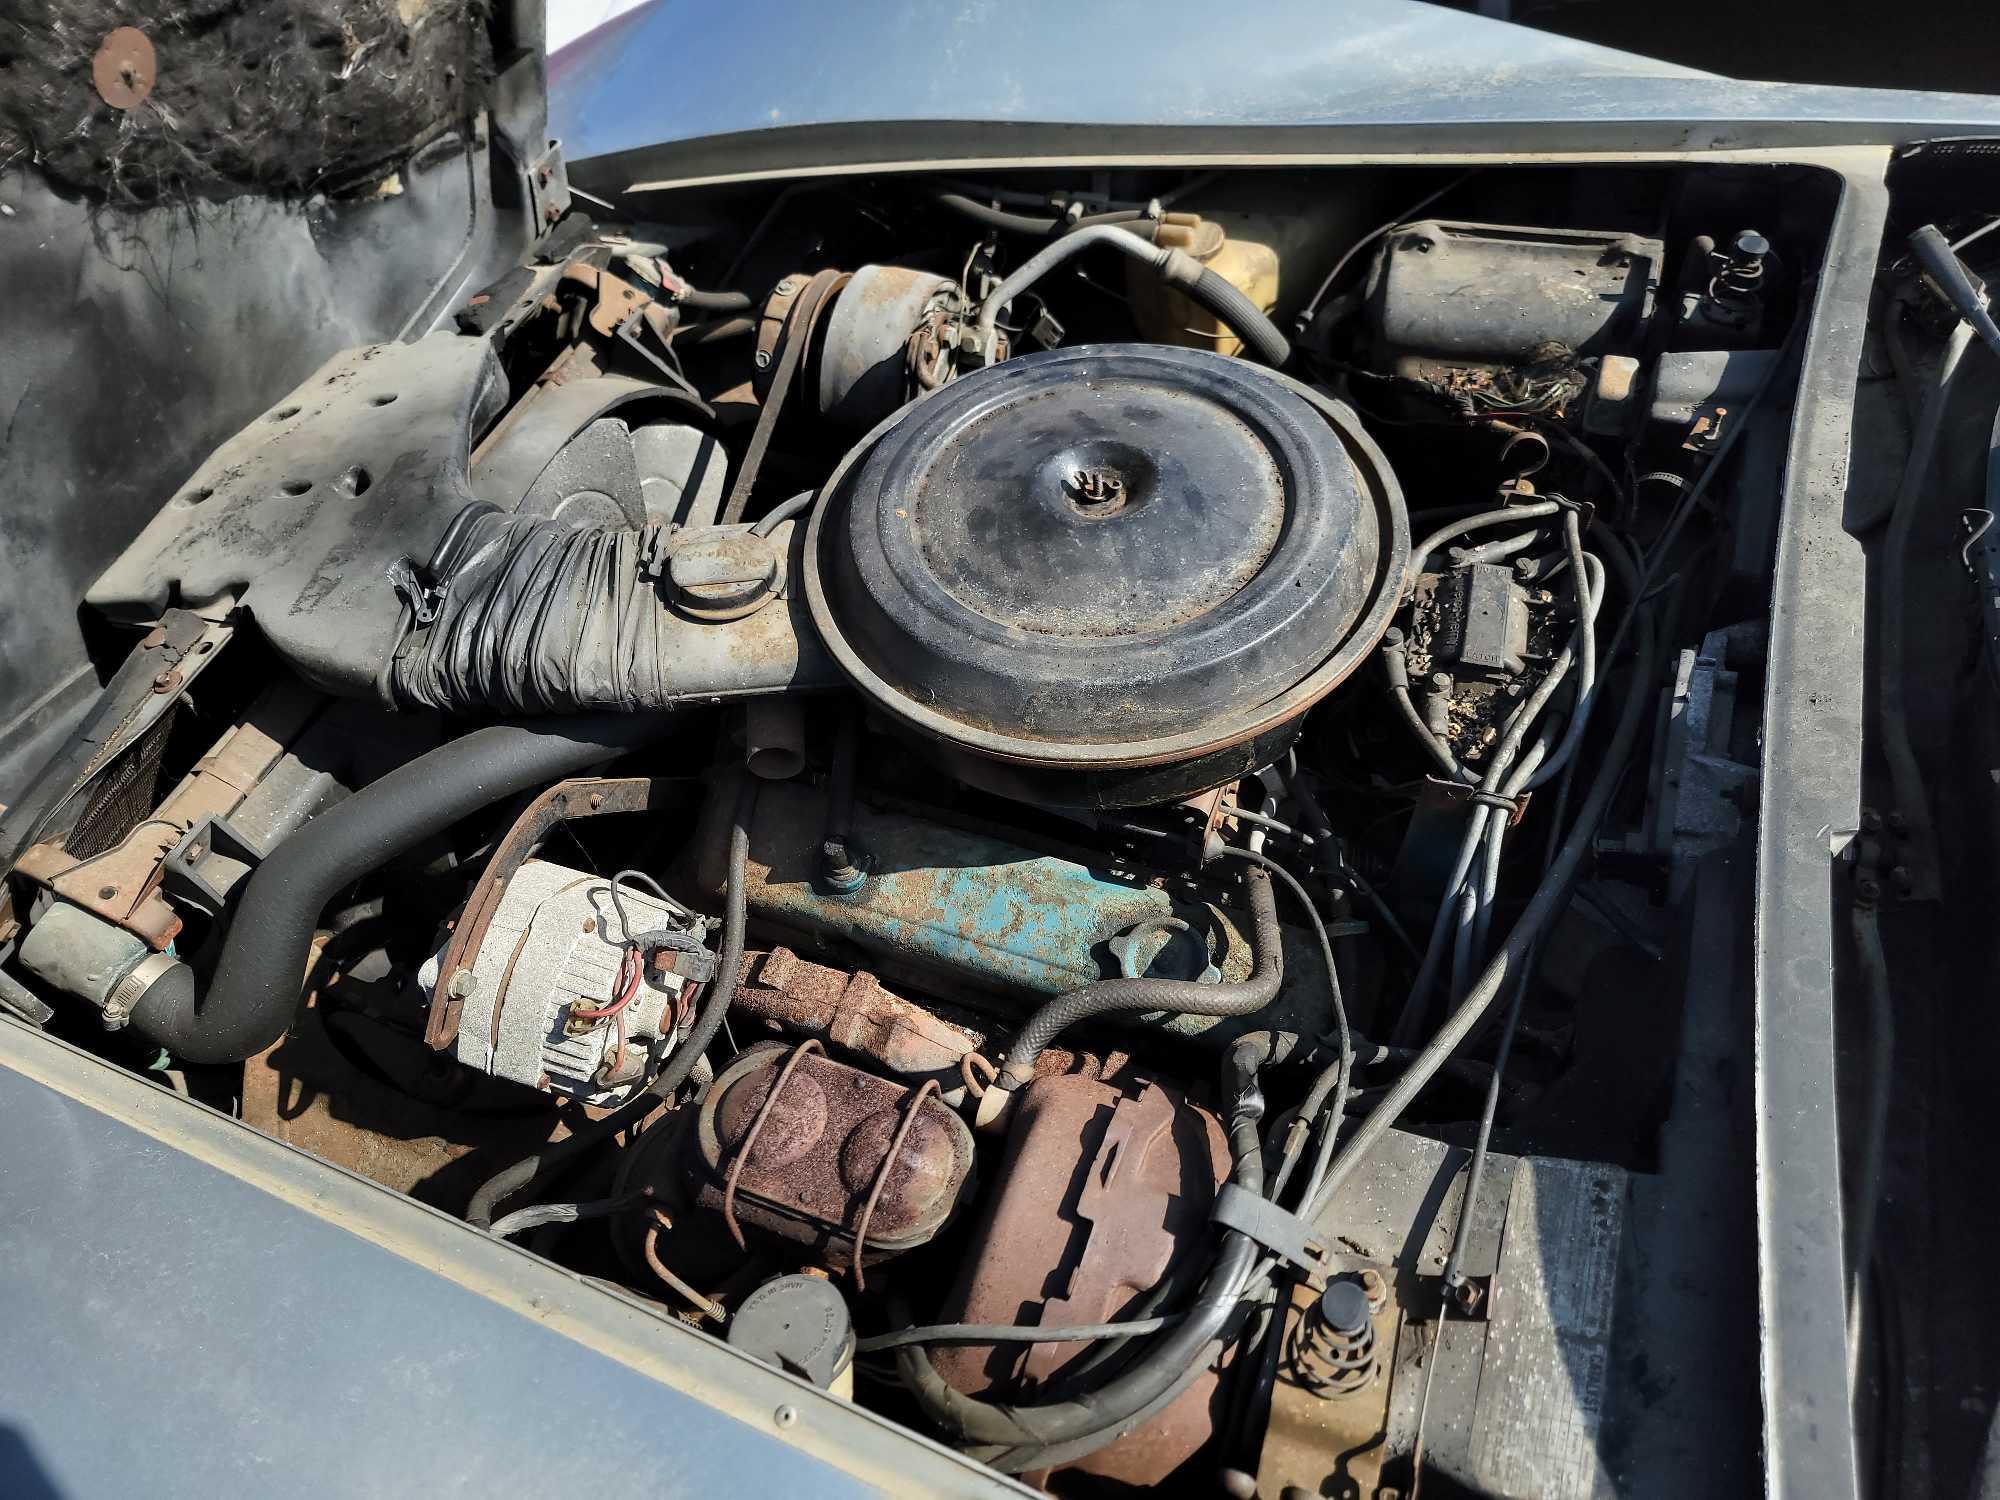 1977 corvette Odometer Says 3226 non running project car